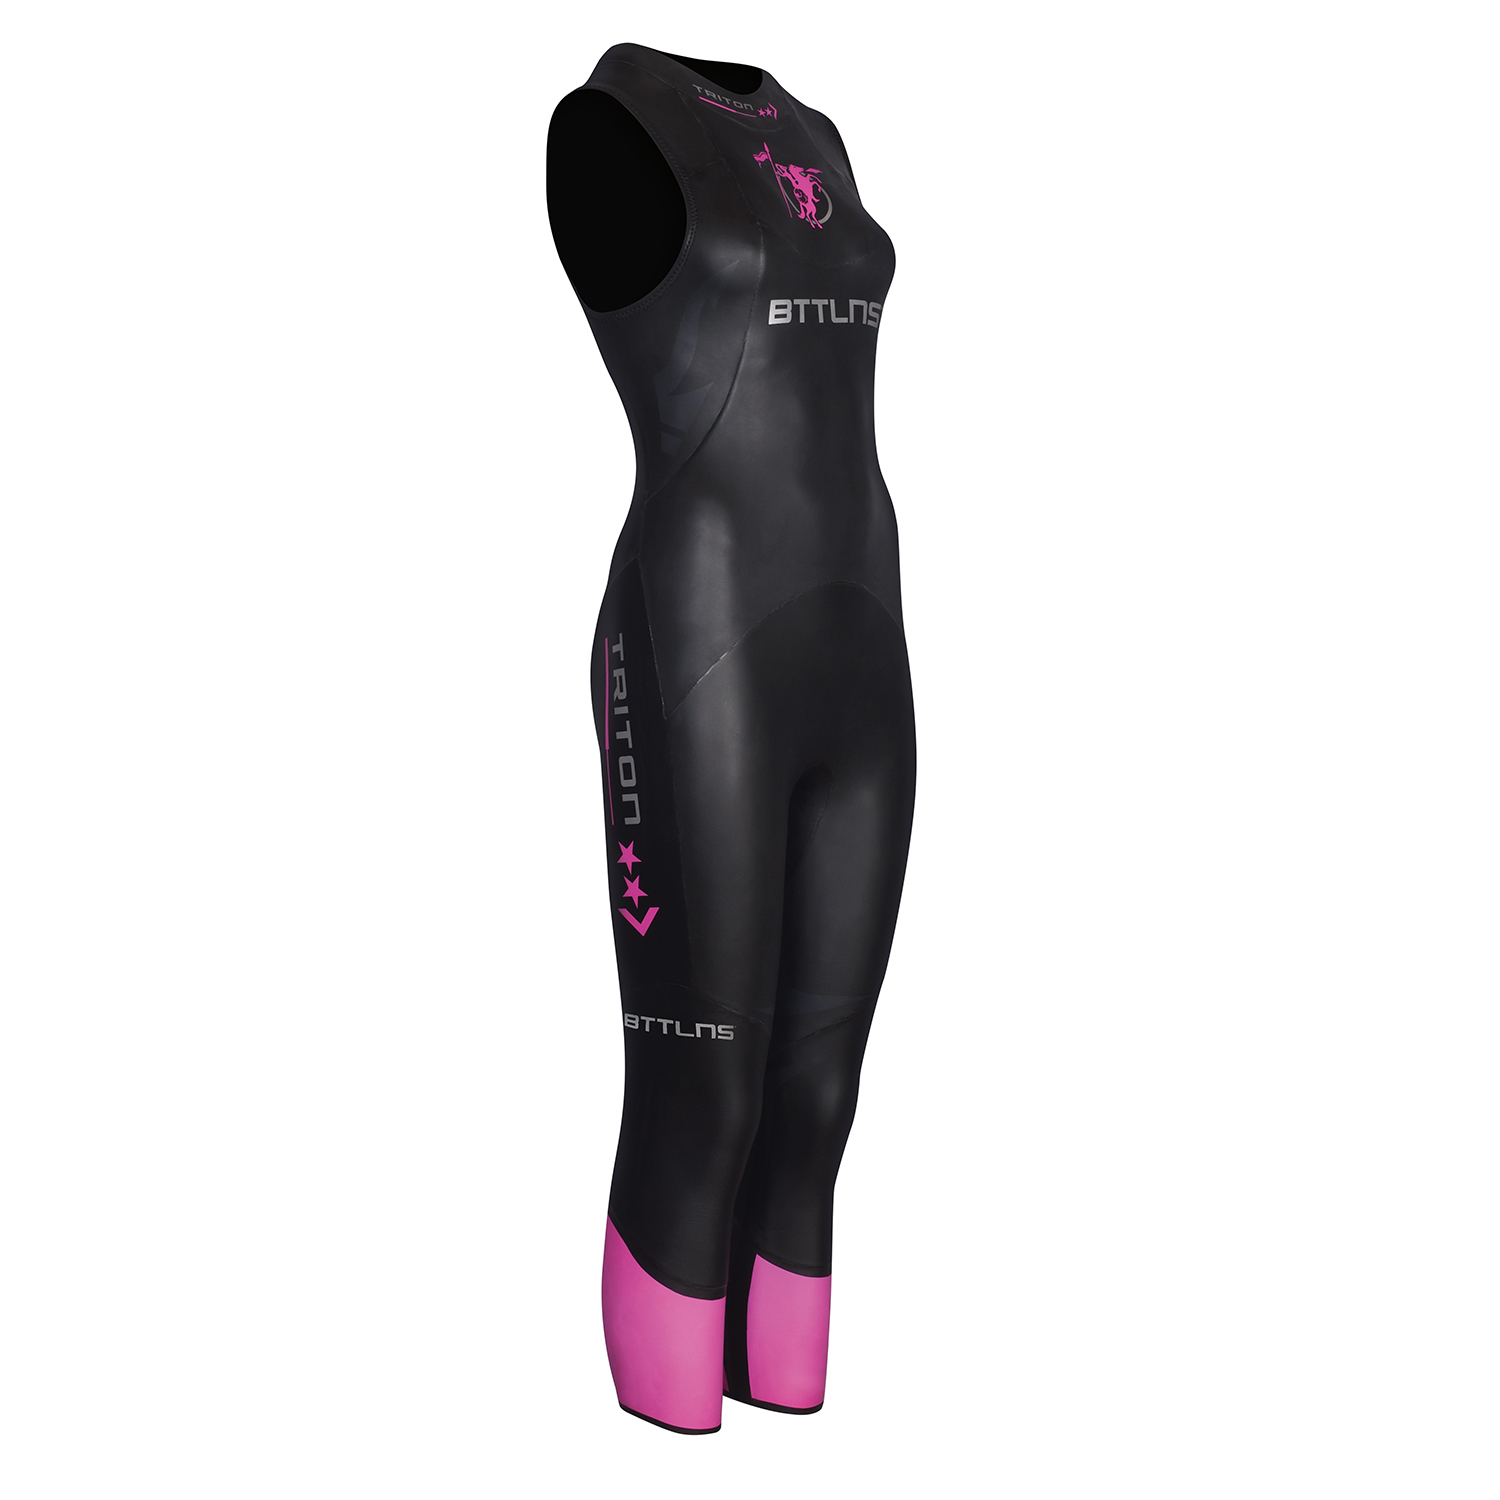 BTTLNS Goddess sleeveless wetsuit Triton 1.0  0121014-039